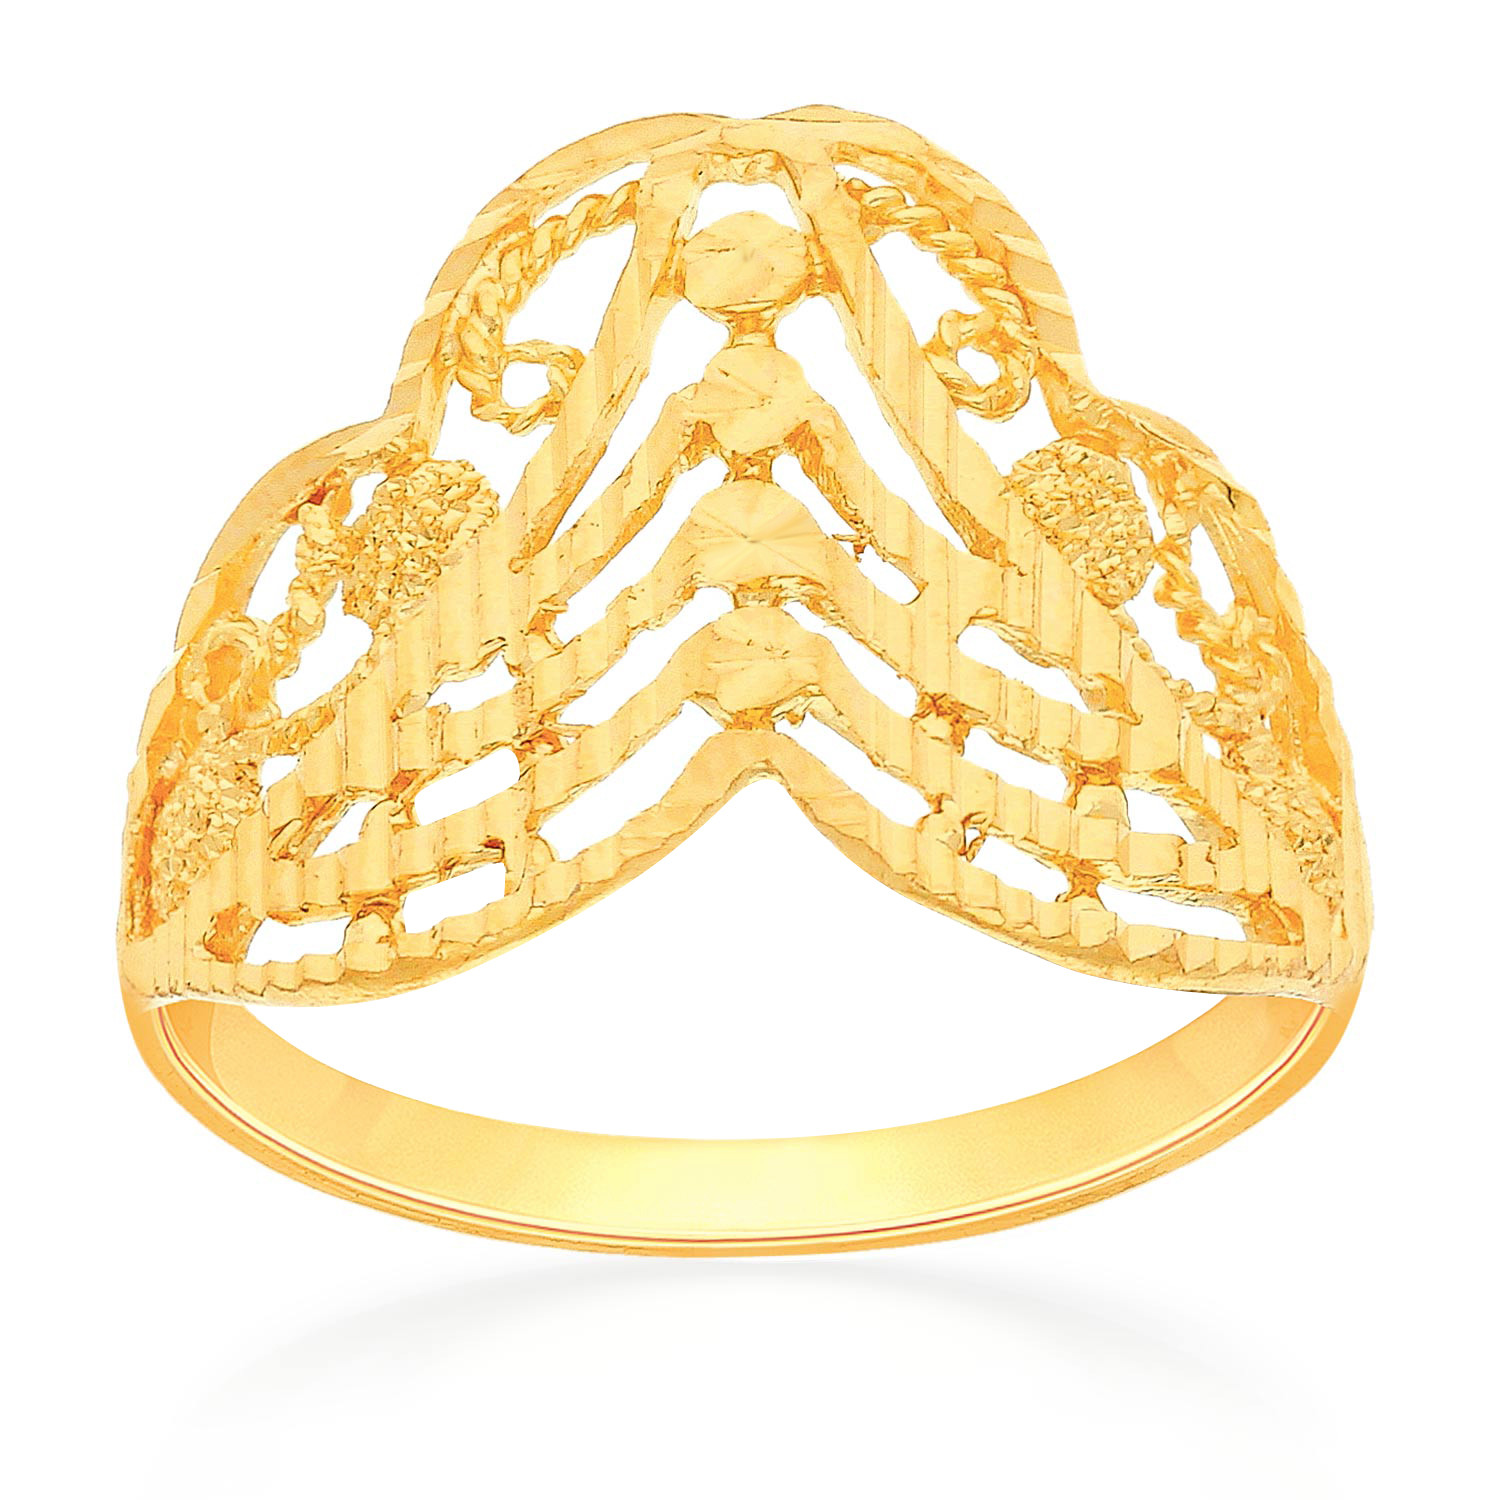 Buy MALABAR GOLD AND DIAMONDS Womens Gold Ring MHAAAAAAEOPS | Shoppers Stop